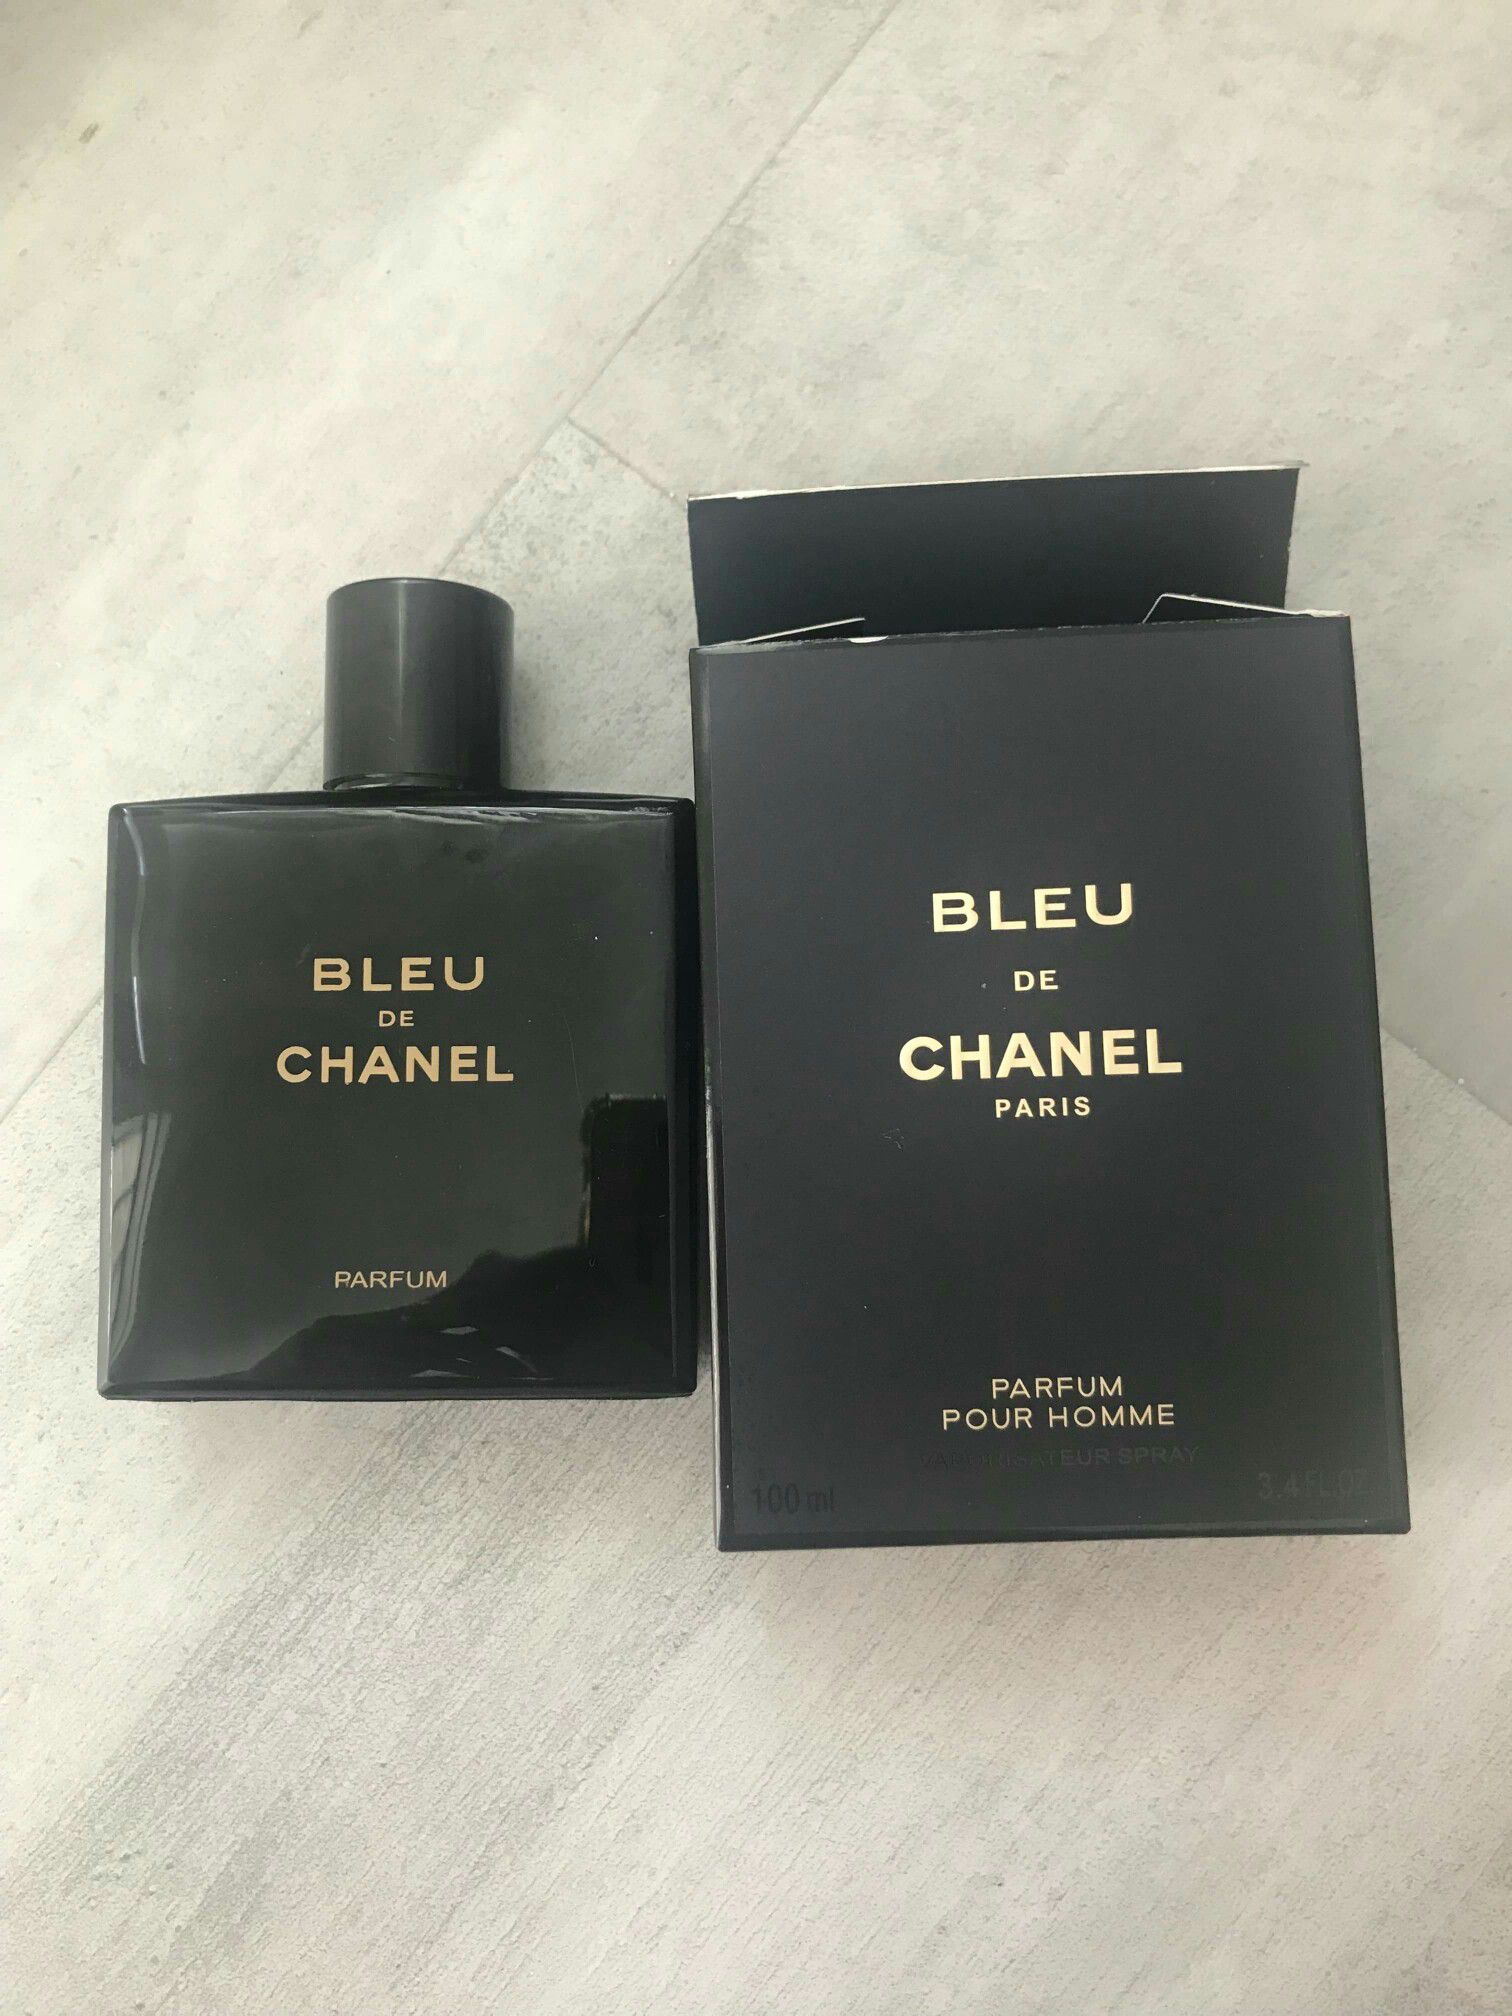 New Bleu De Chanel perfume